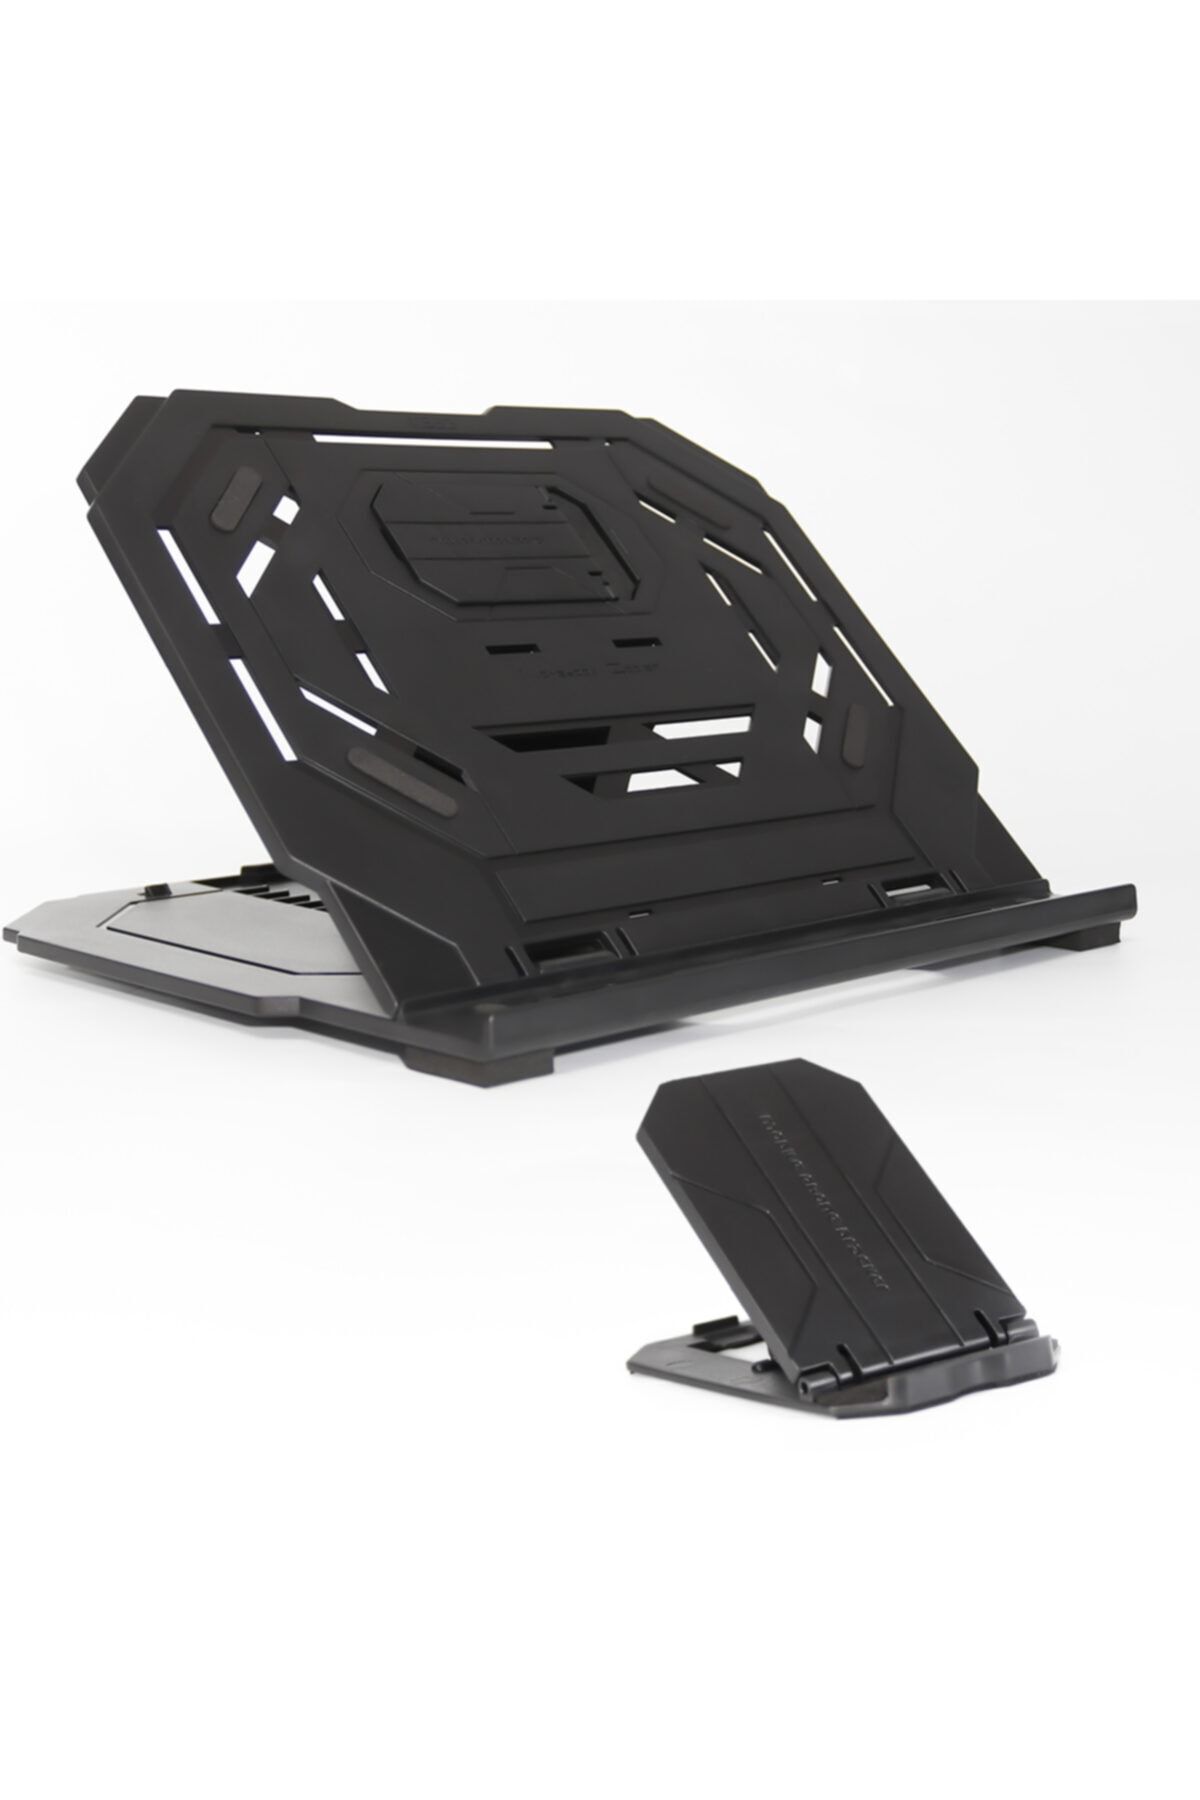 TRILOGIC Siyah Snap Fs01 Portatif Laptop Ve Mobil Cihaz Standı